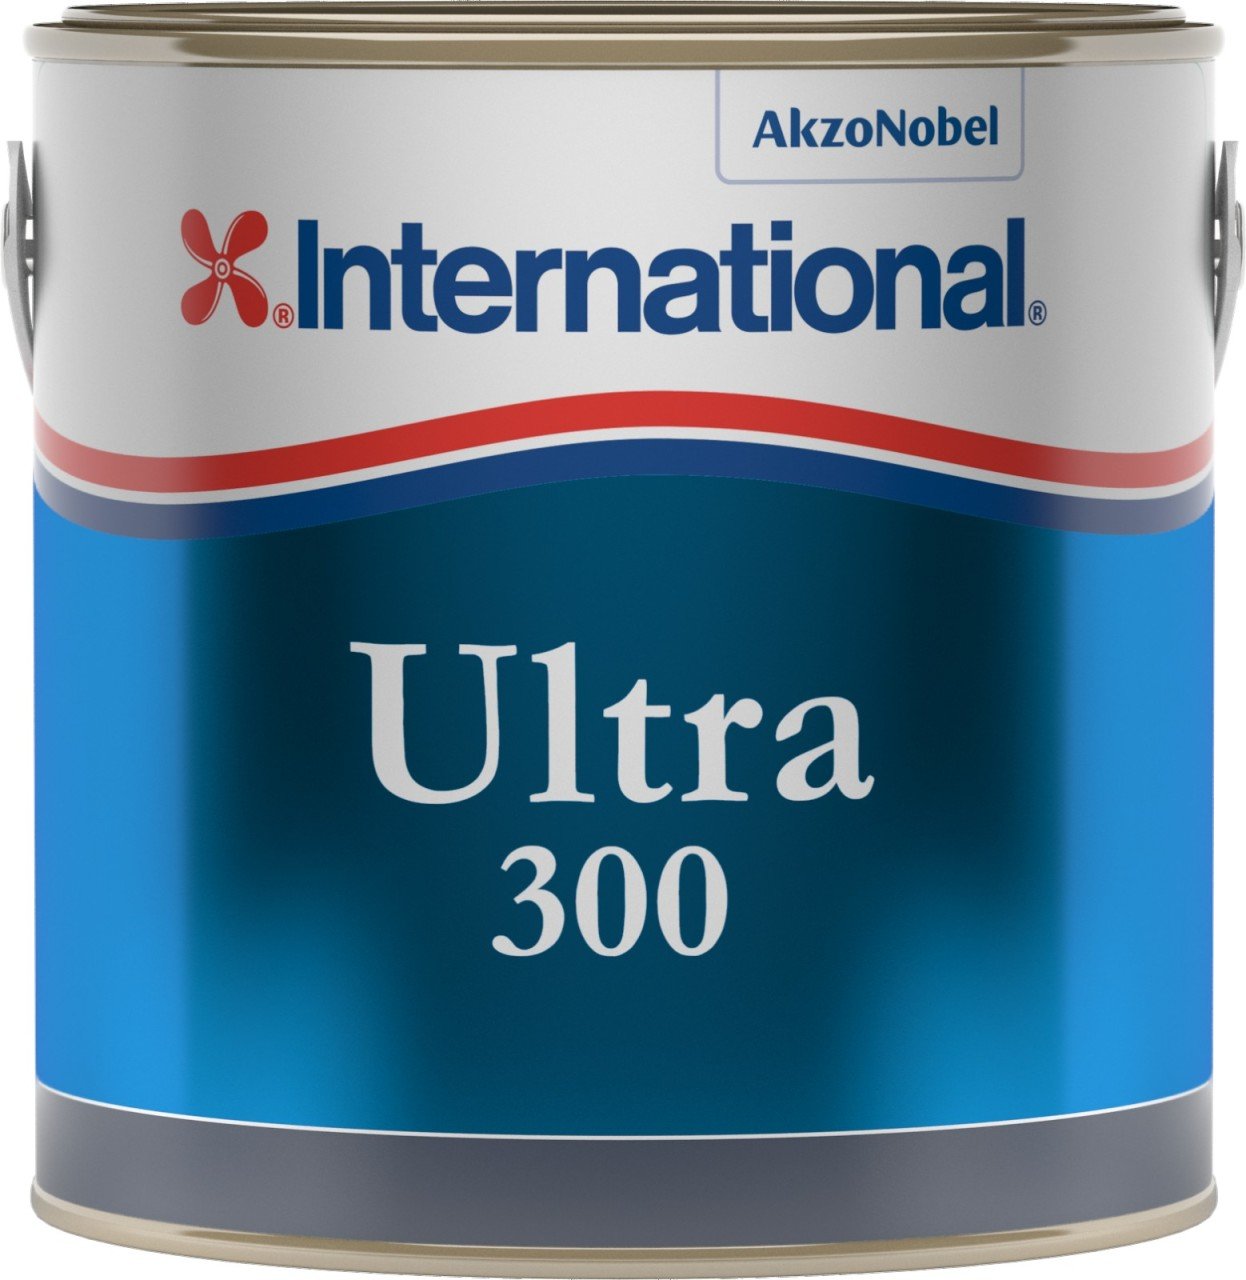 International Ultra 300 2.5 LT Zehirli Boya Mavi